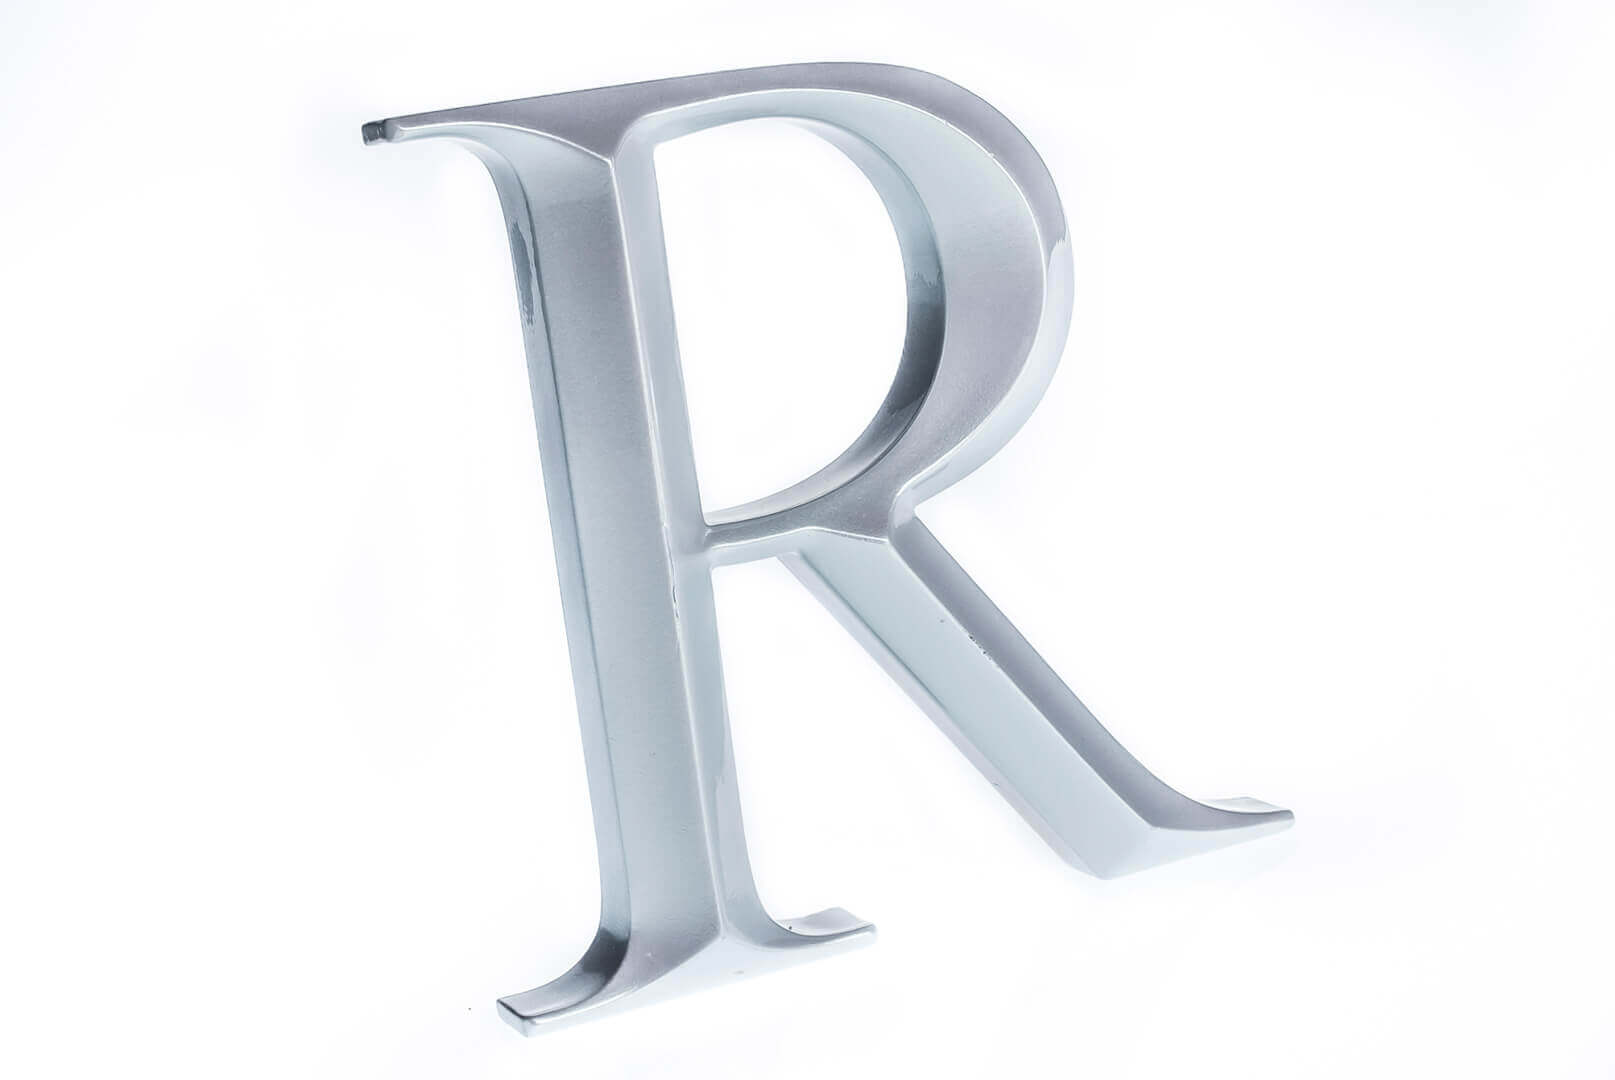 Prismatische Buchstaben - Prismatische Buchstaben aus Metall